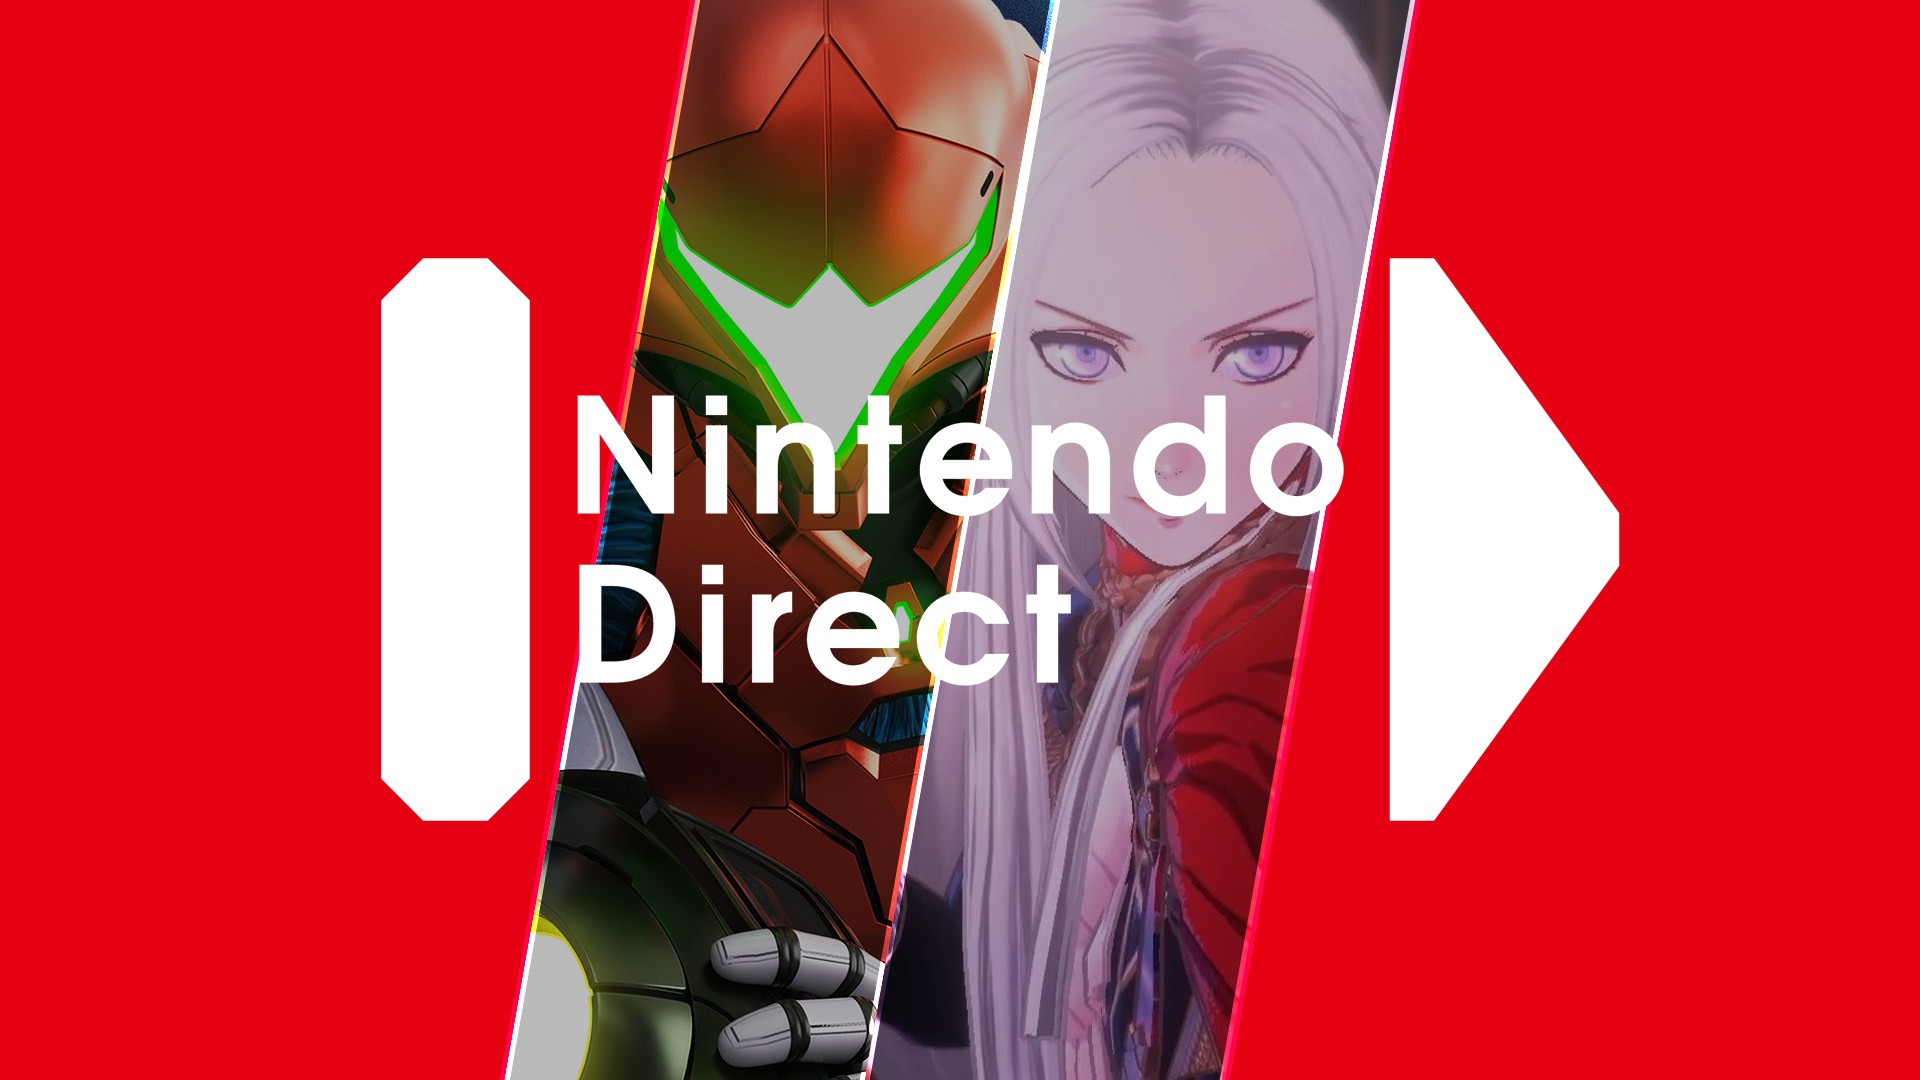 CHRONO CROSS: THE RADICAL DREAMERS EDITION – Nintendo Direct 2.9.22 -  Nintendo Switch 